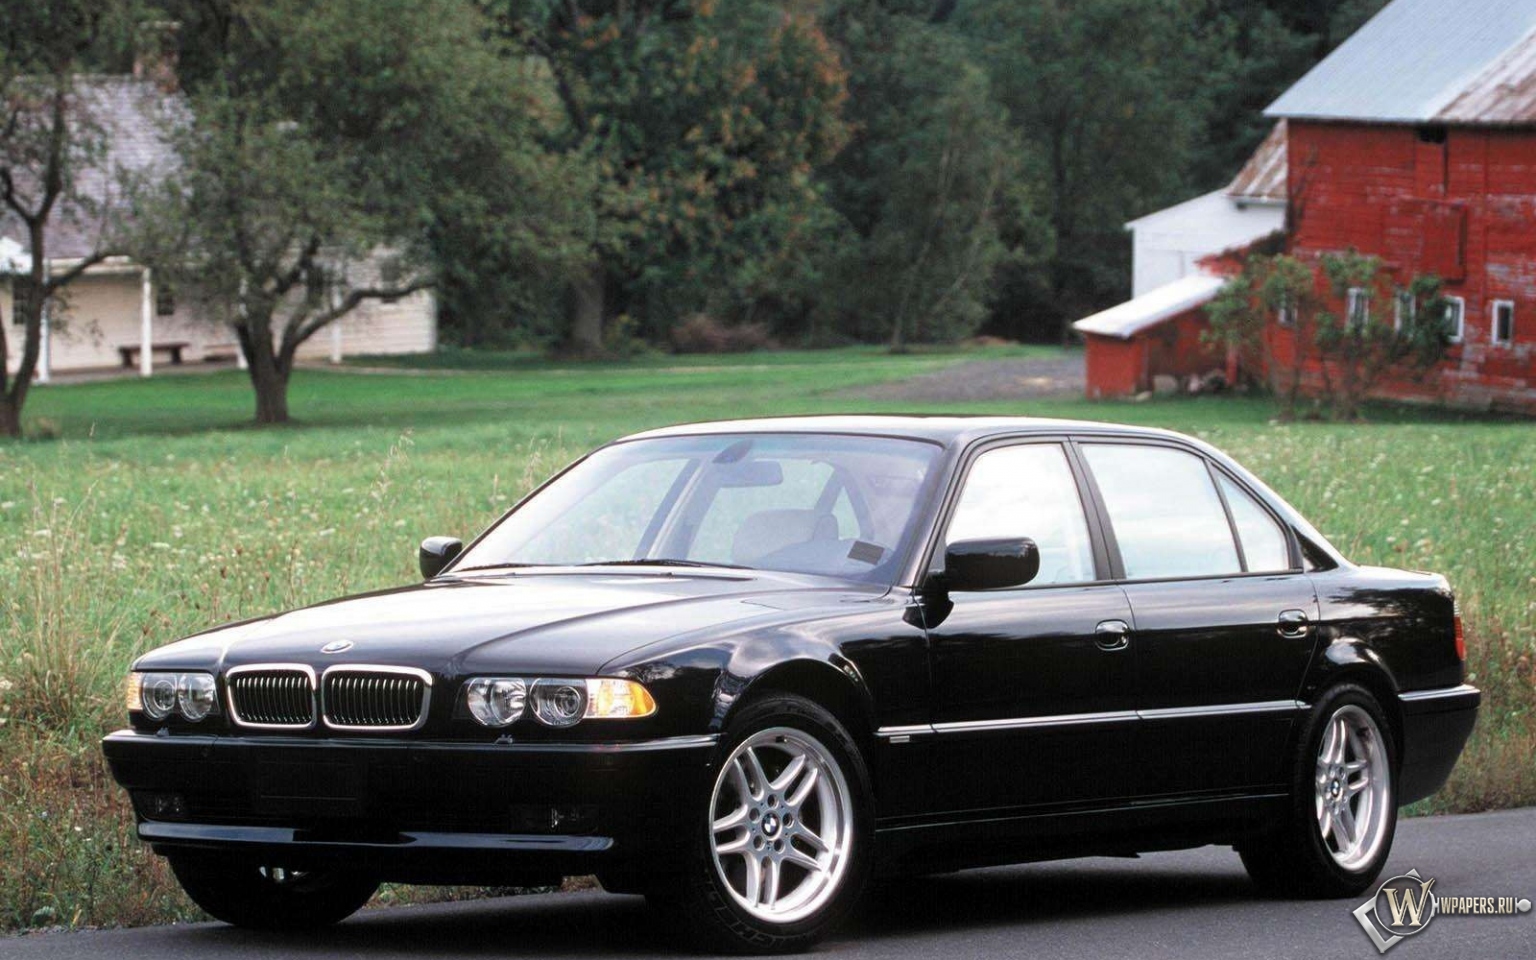 BMW 7 Series 2000 1536x960